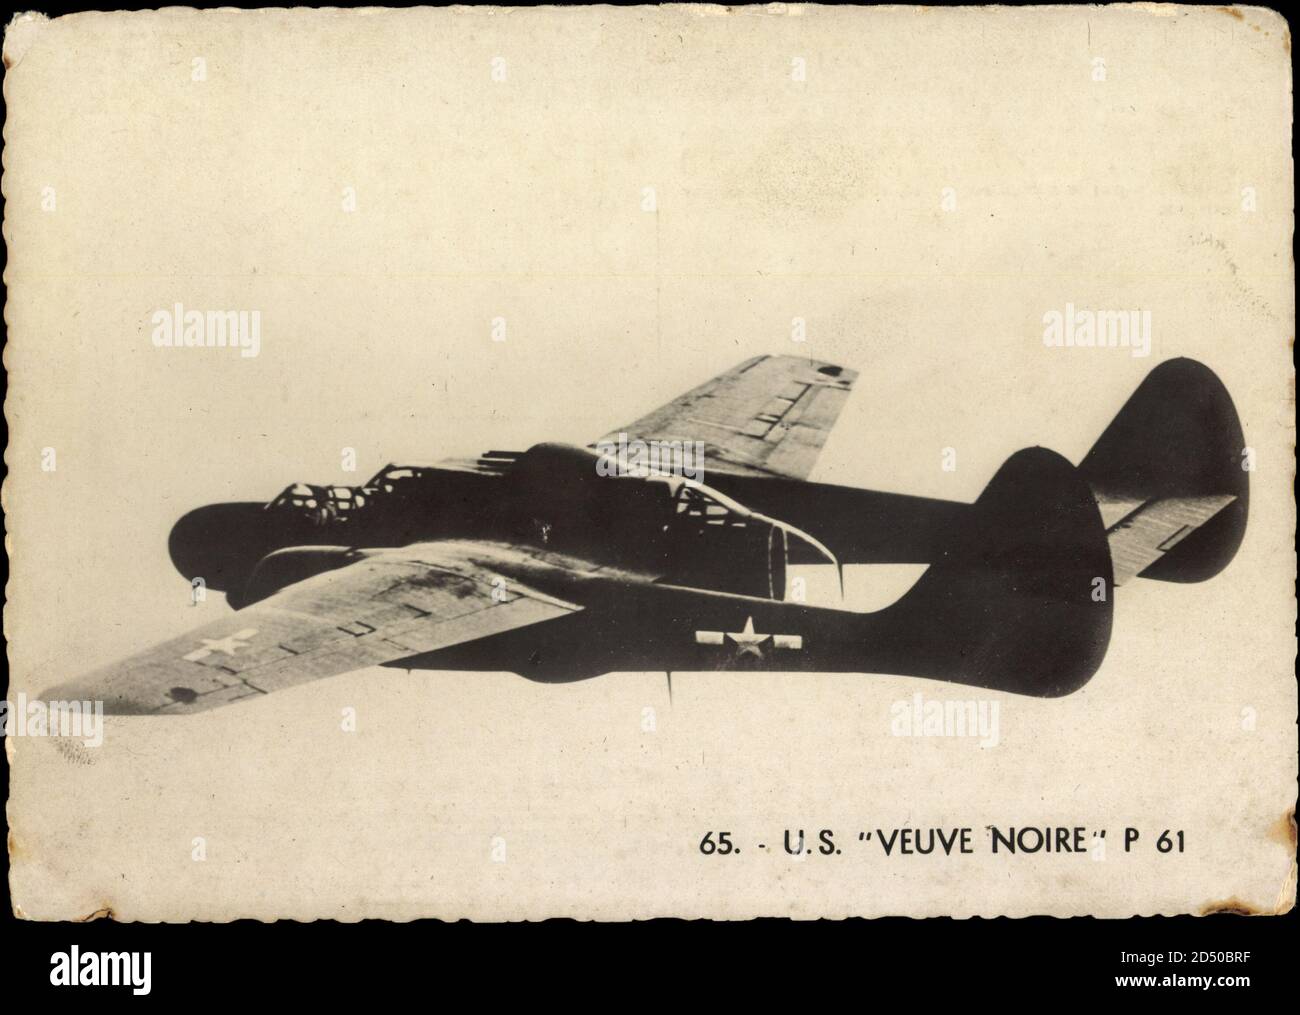 U.S. Veuve Noire, P 61,Pratt and Whitney,double Wasp | usage worldwide Stock Photo